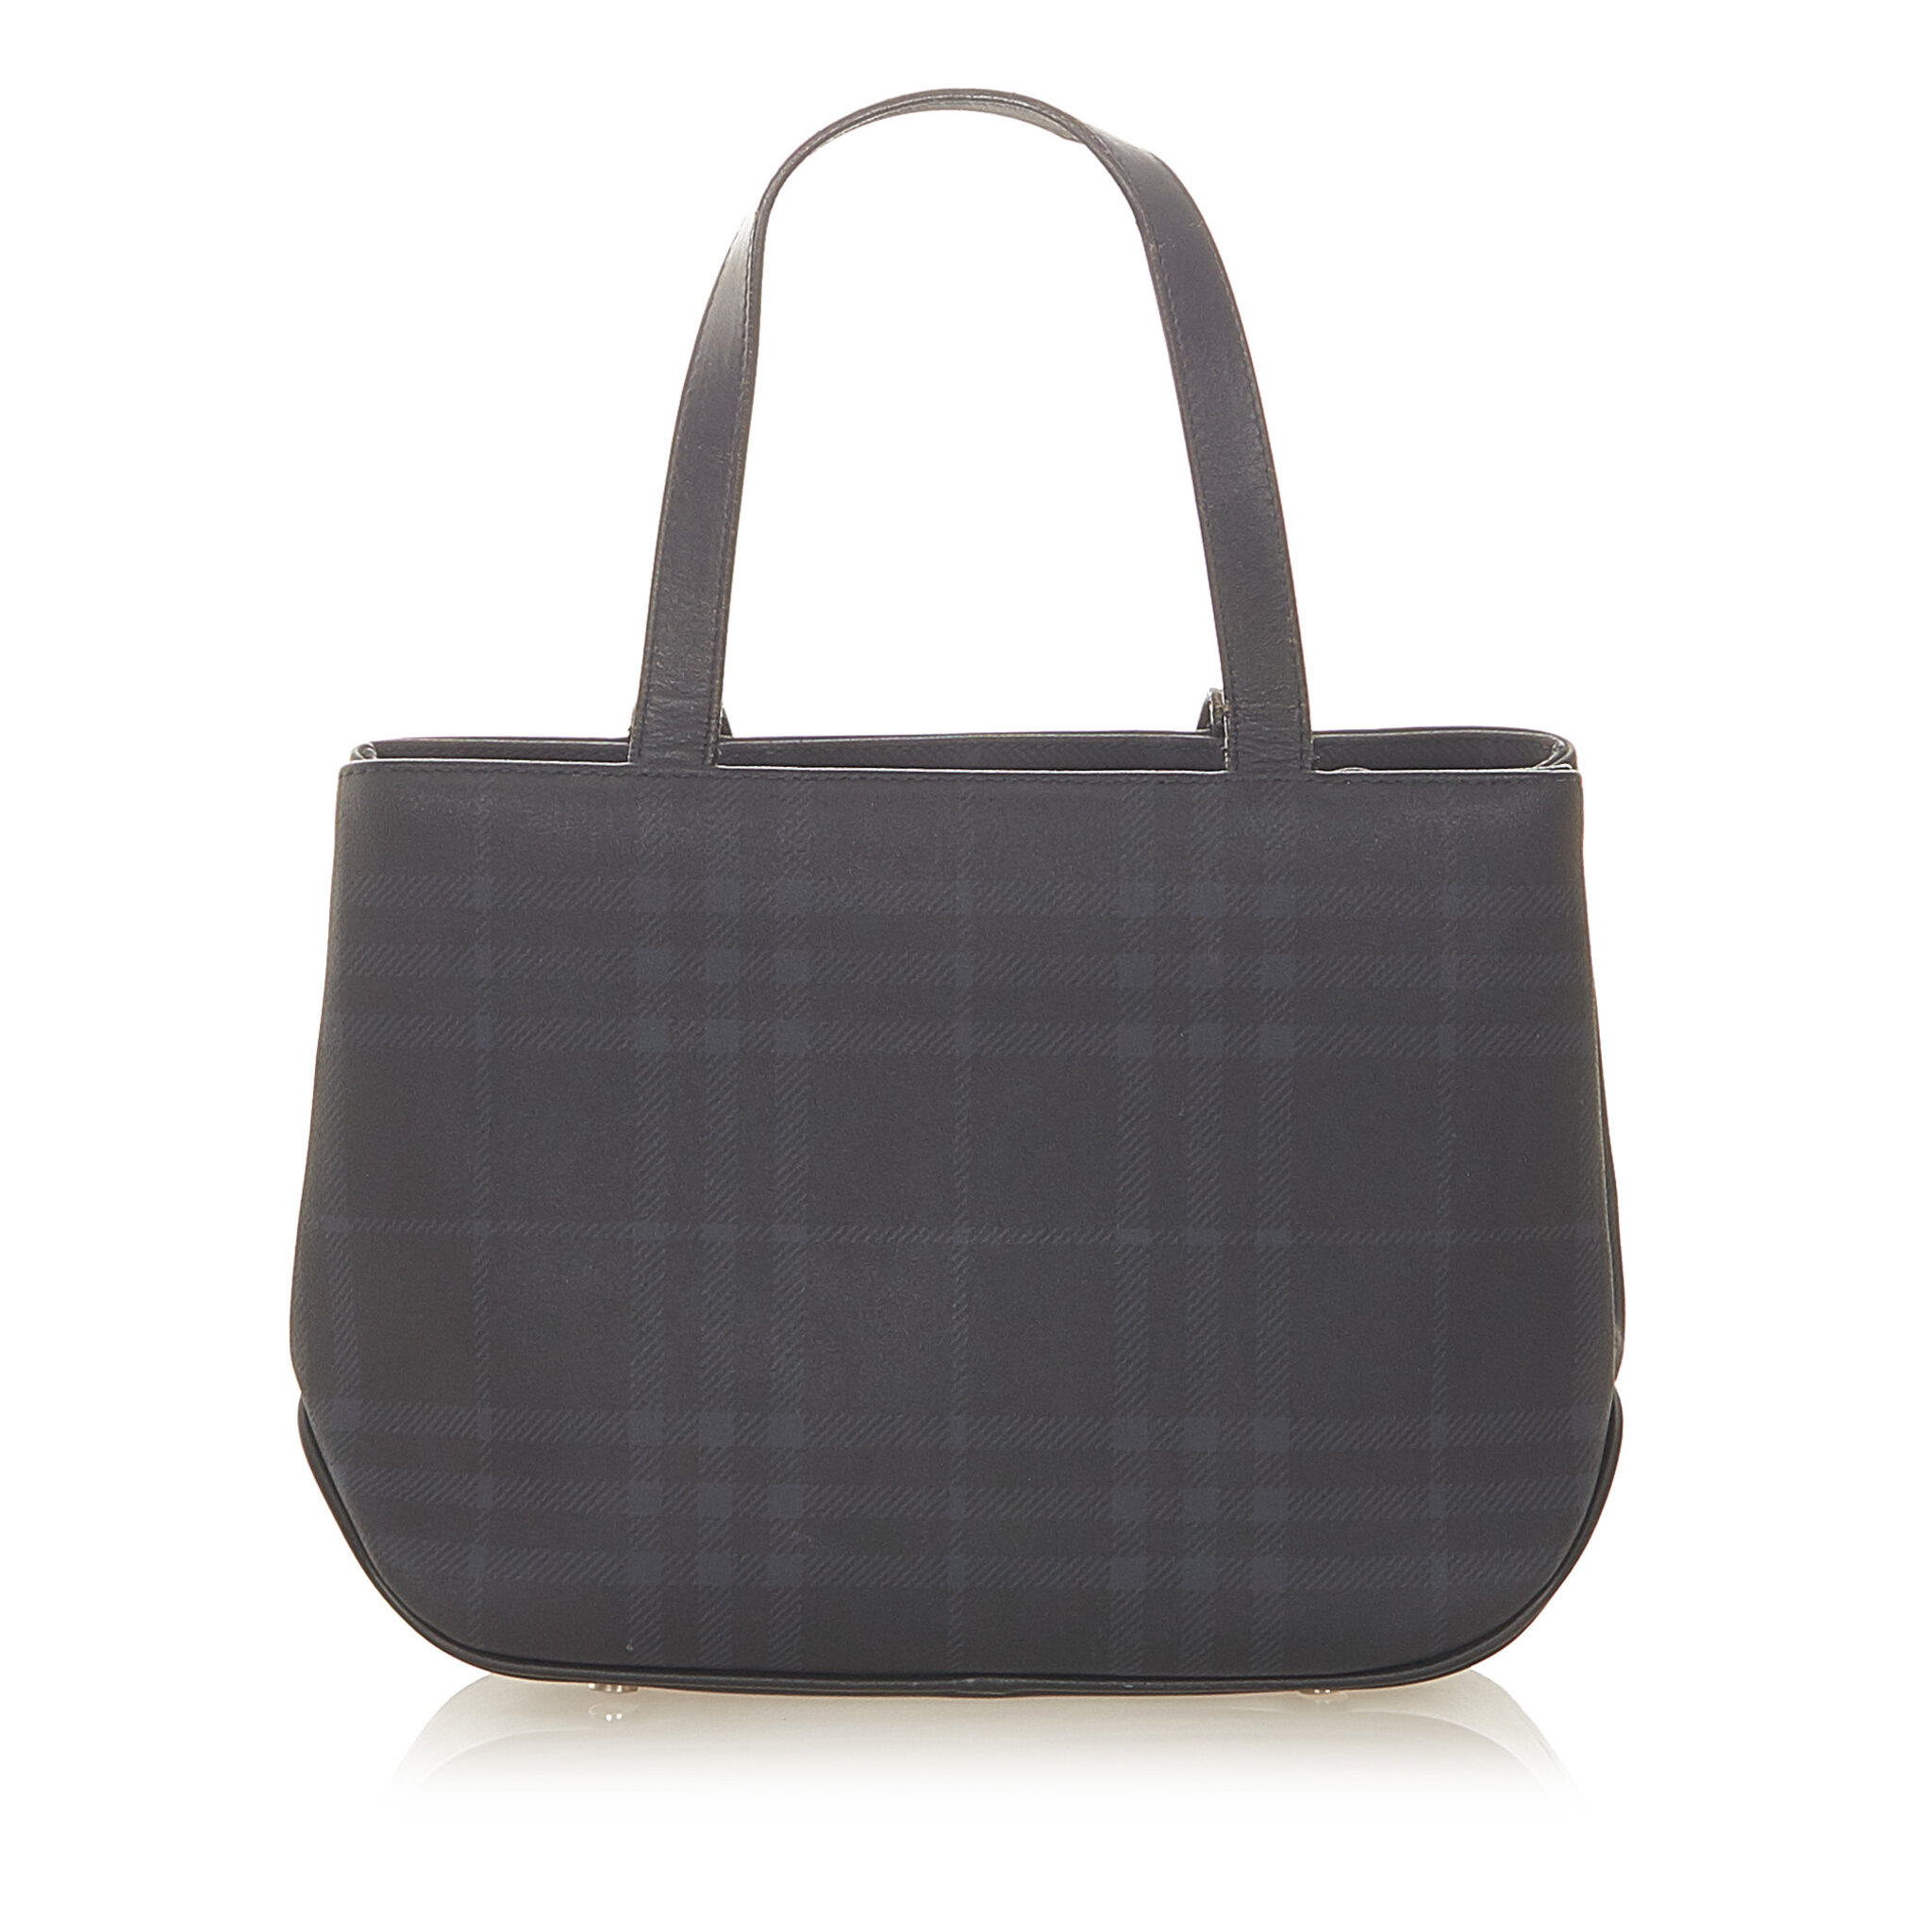 Burberry Tonal Check Handbag, black